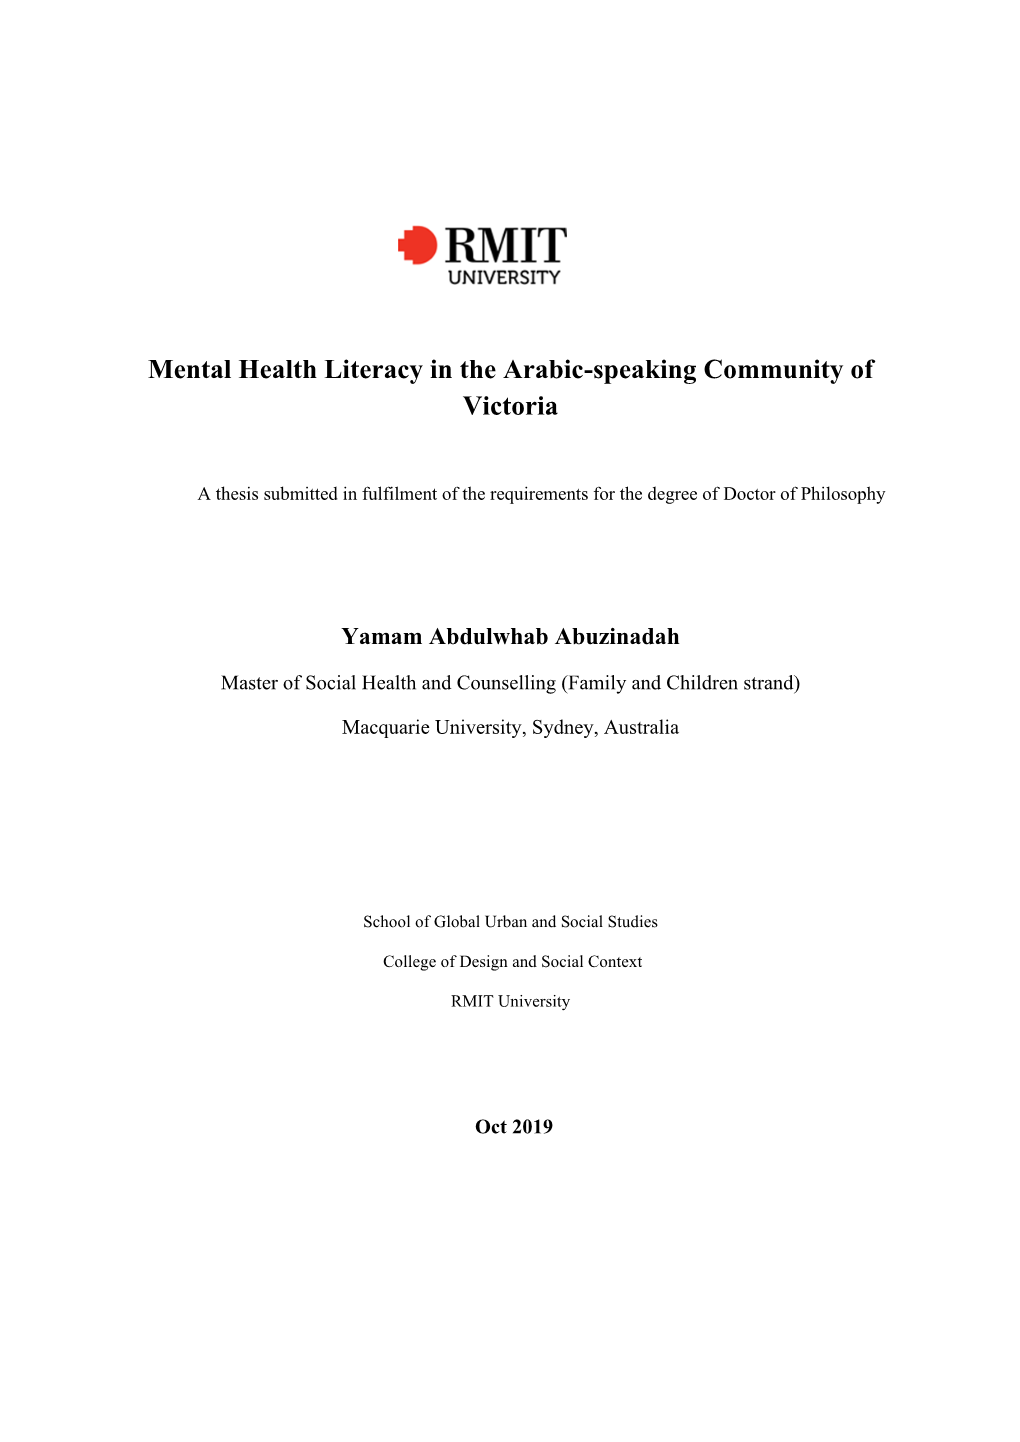 Mental Health Literacy in the Arabic-Speaking Community of Victoria